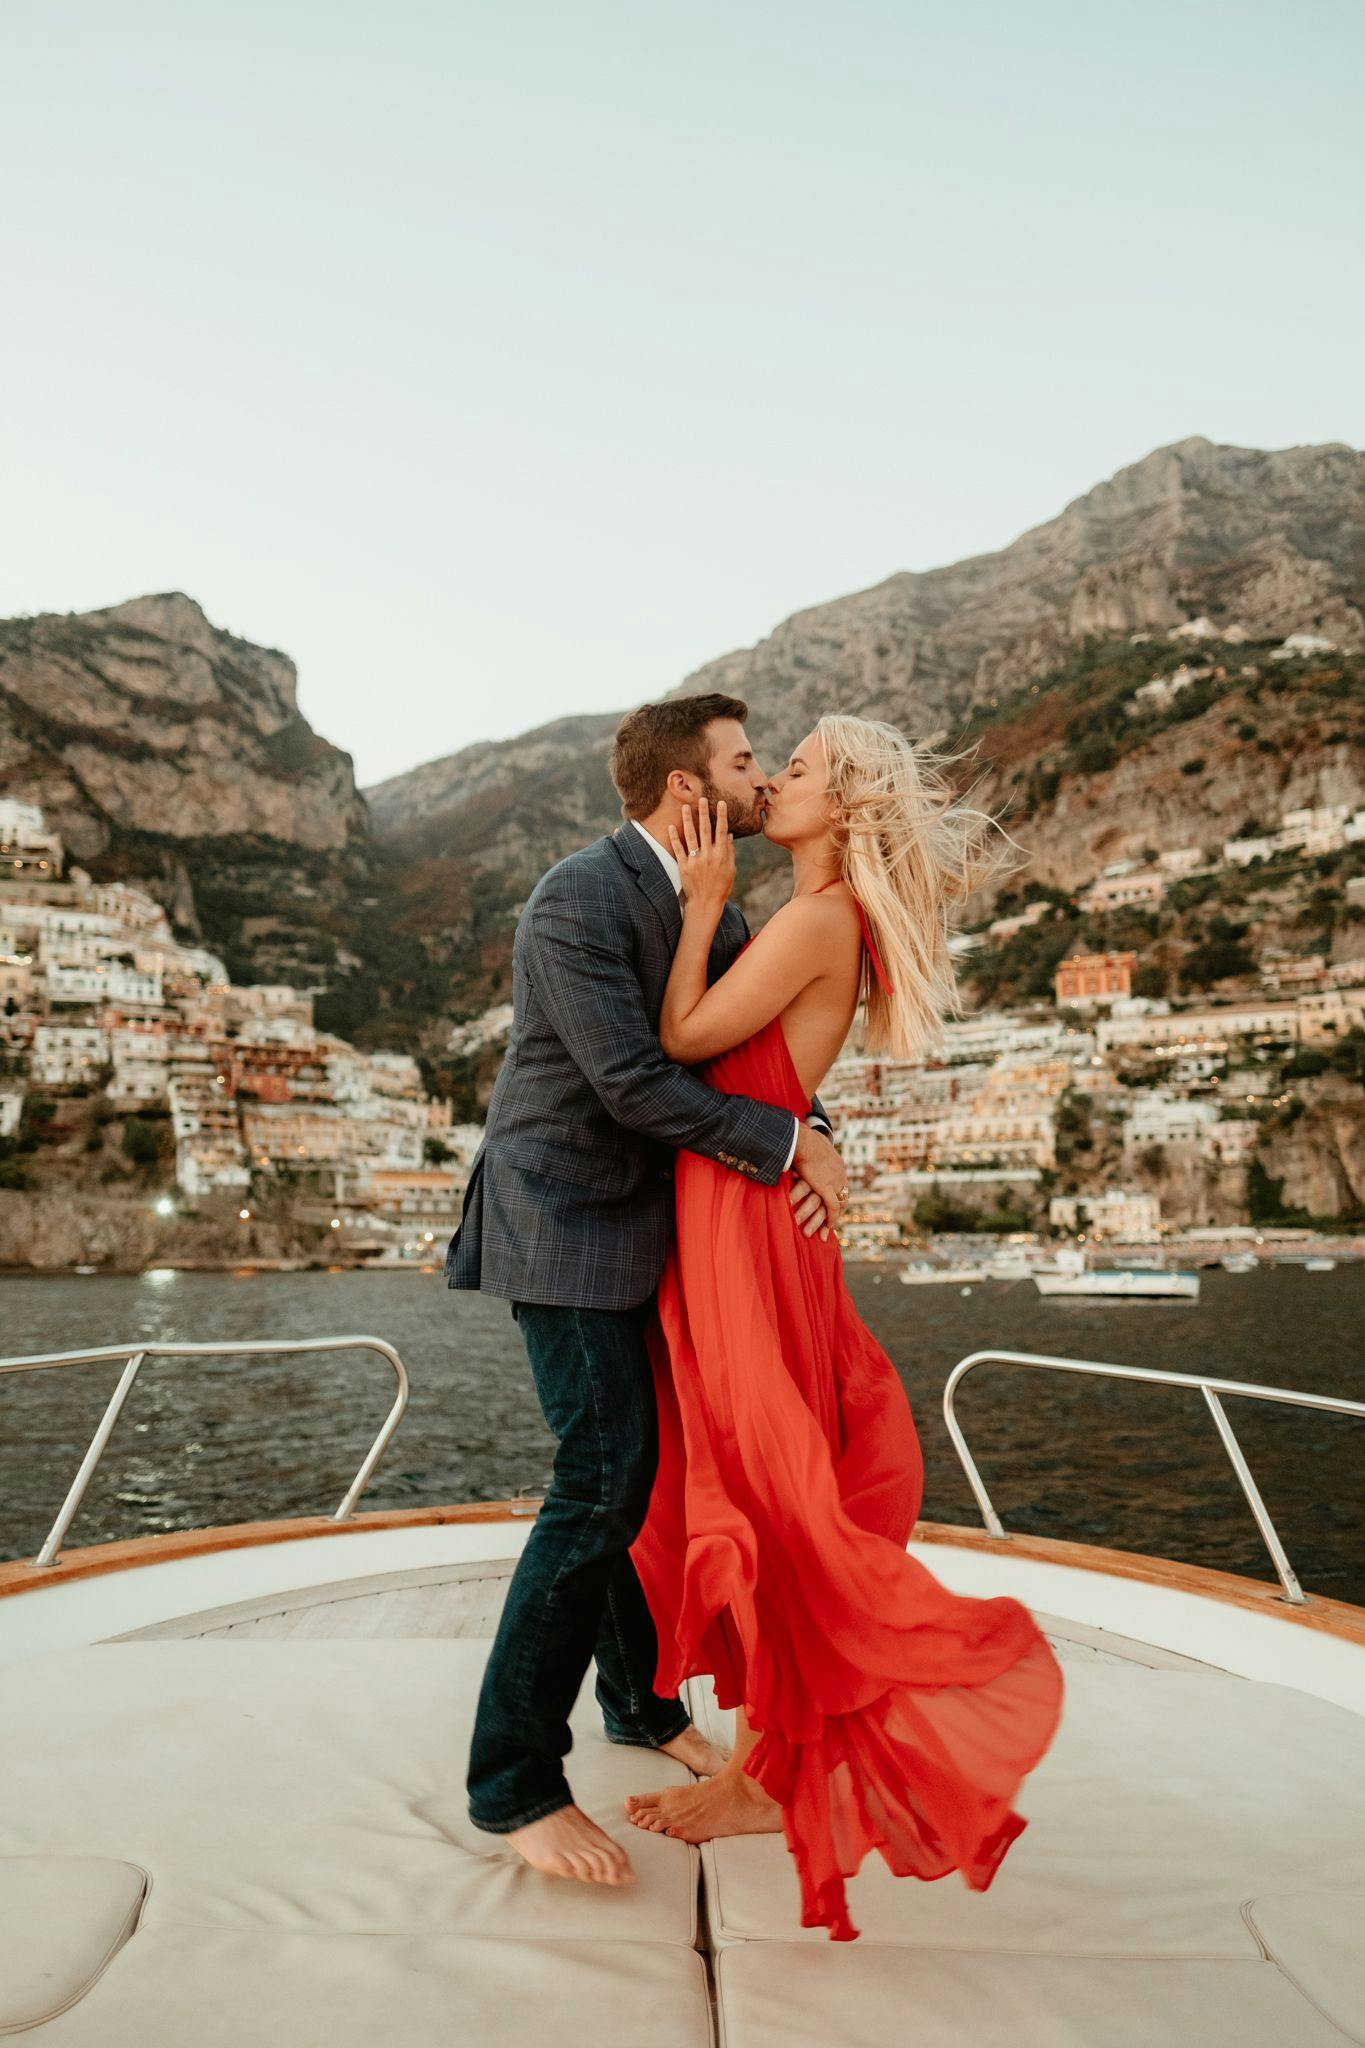 Wedding proposal in Positano